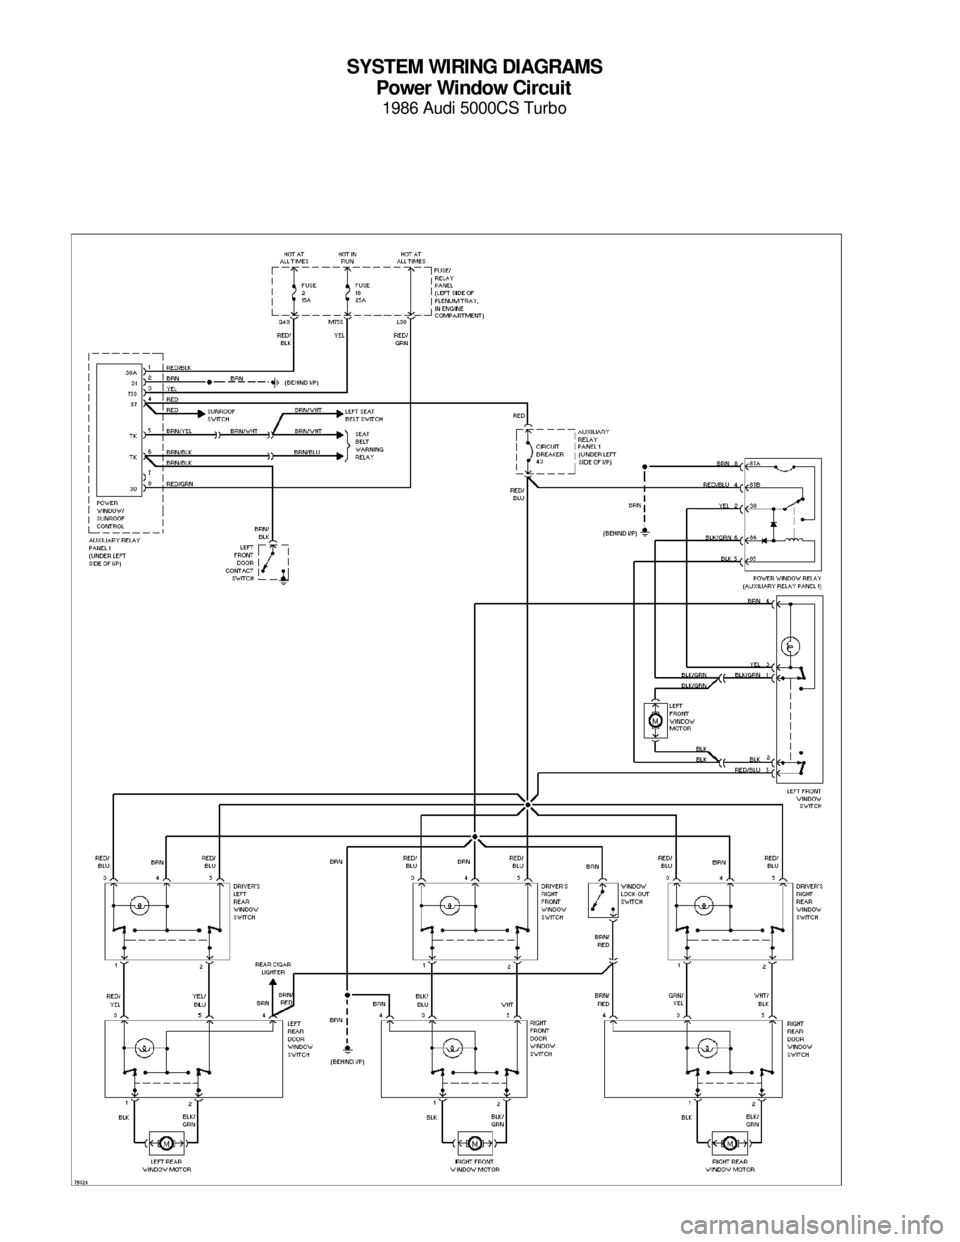 AUDI 5000CS 1986 C2 System Wiring Diagram SYSTEM WIRING DIAGRAMS
Power Window Circuit
1986 Audi 5000CS Turbo
For x    
Copyright © 1998 Mitchell Repair Information Company, LLCMonday, July 19, 2004  05:52PM 